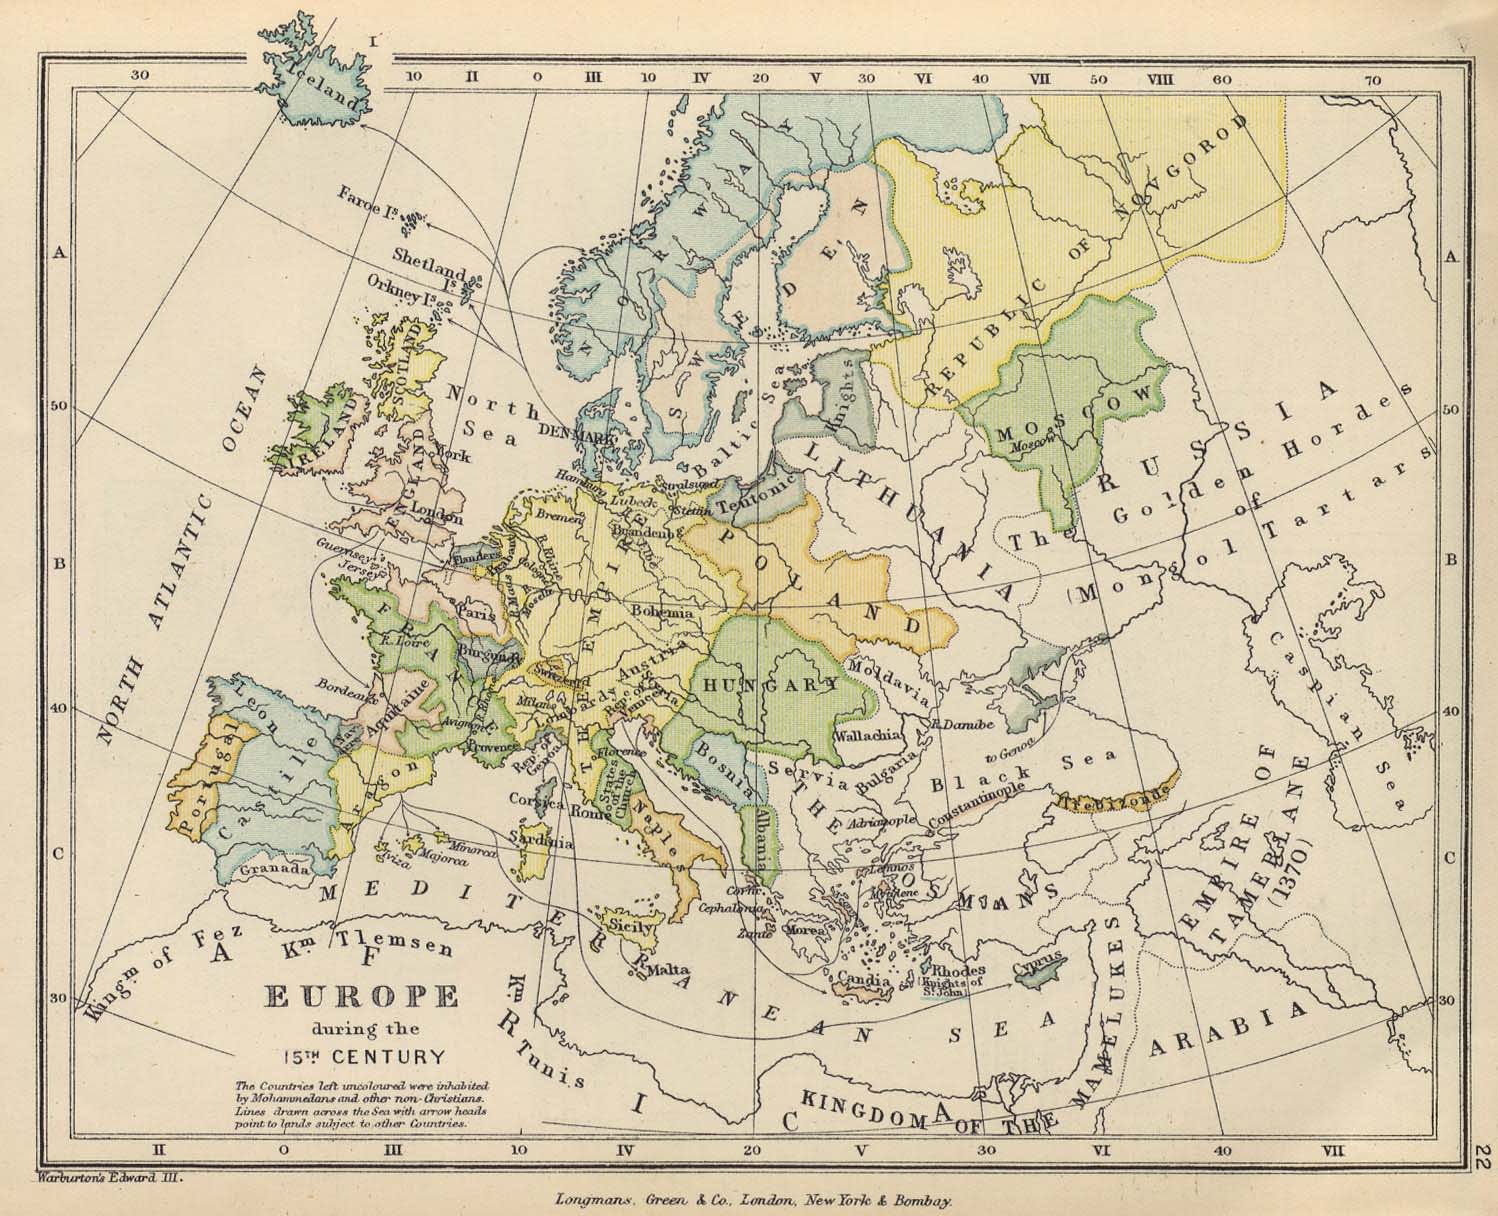 http://www.lib.utexas.edu/maps/historical/europe_15th_colbeck.jpg